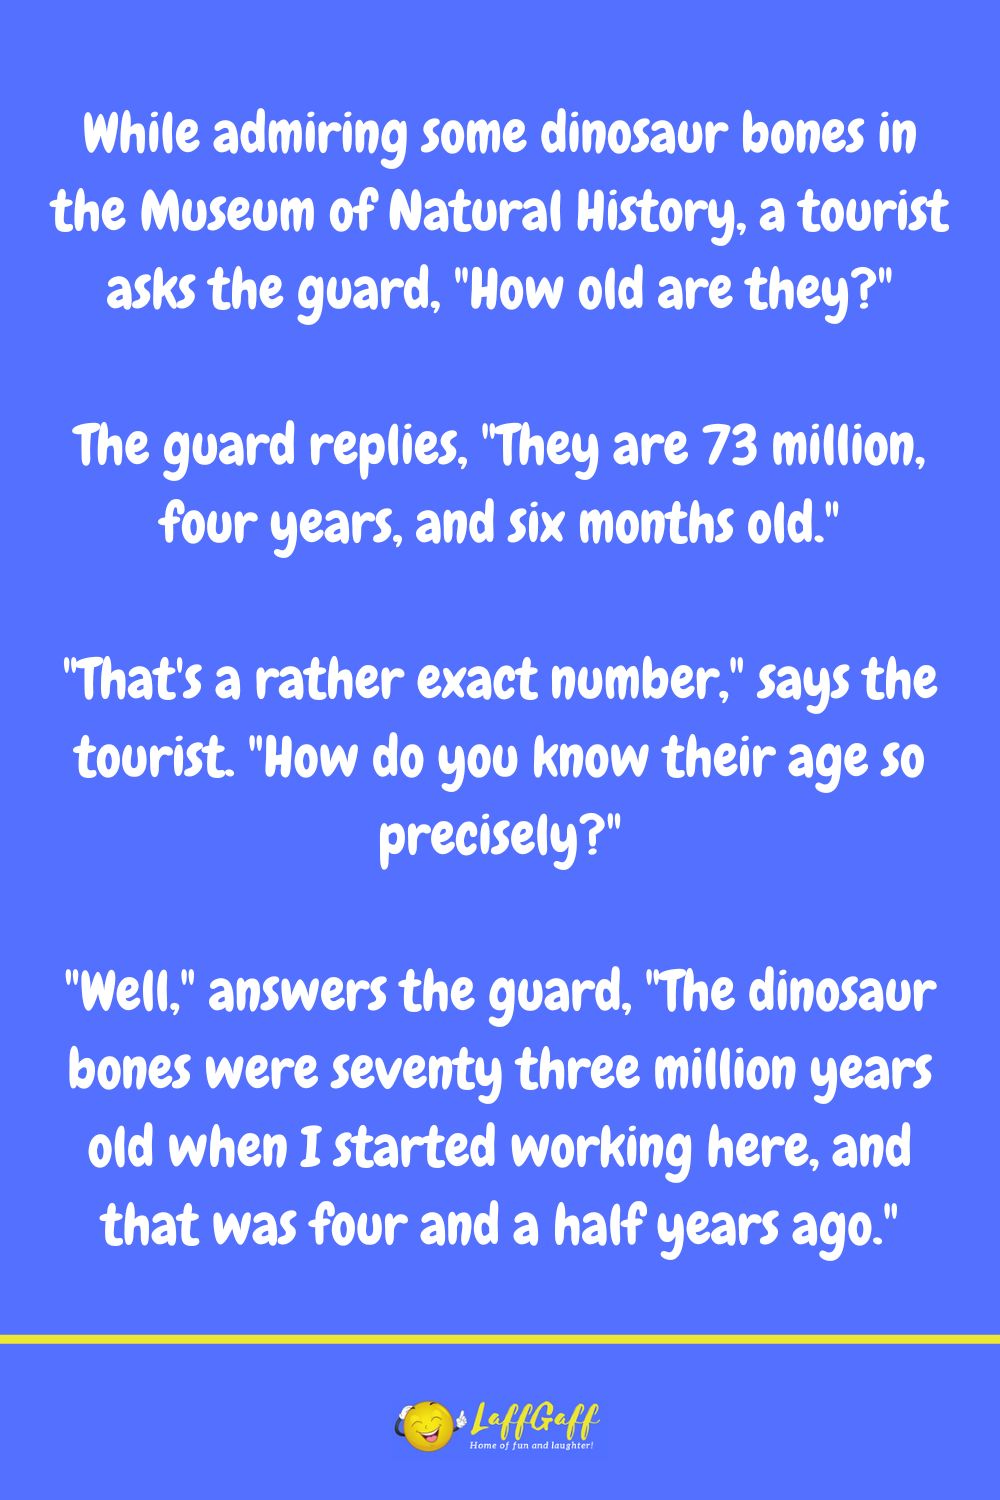 Dinosaur bones joke from LaffGaff.